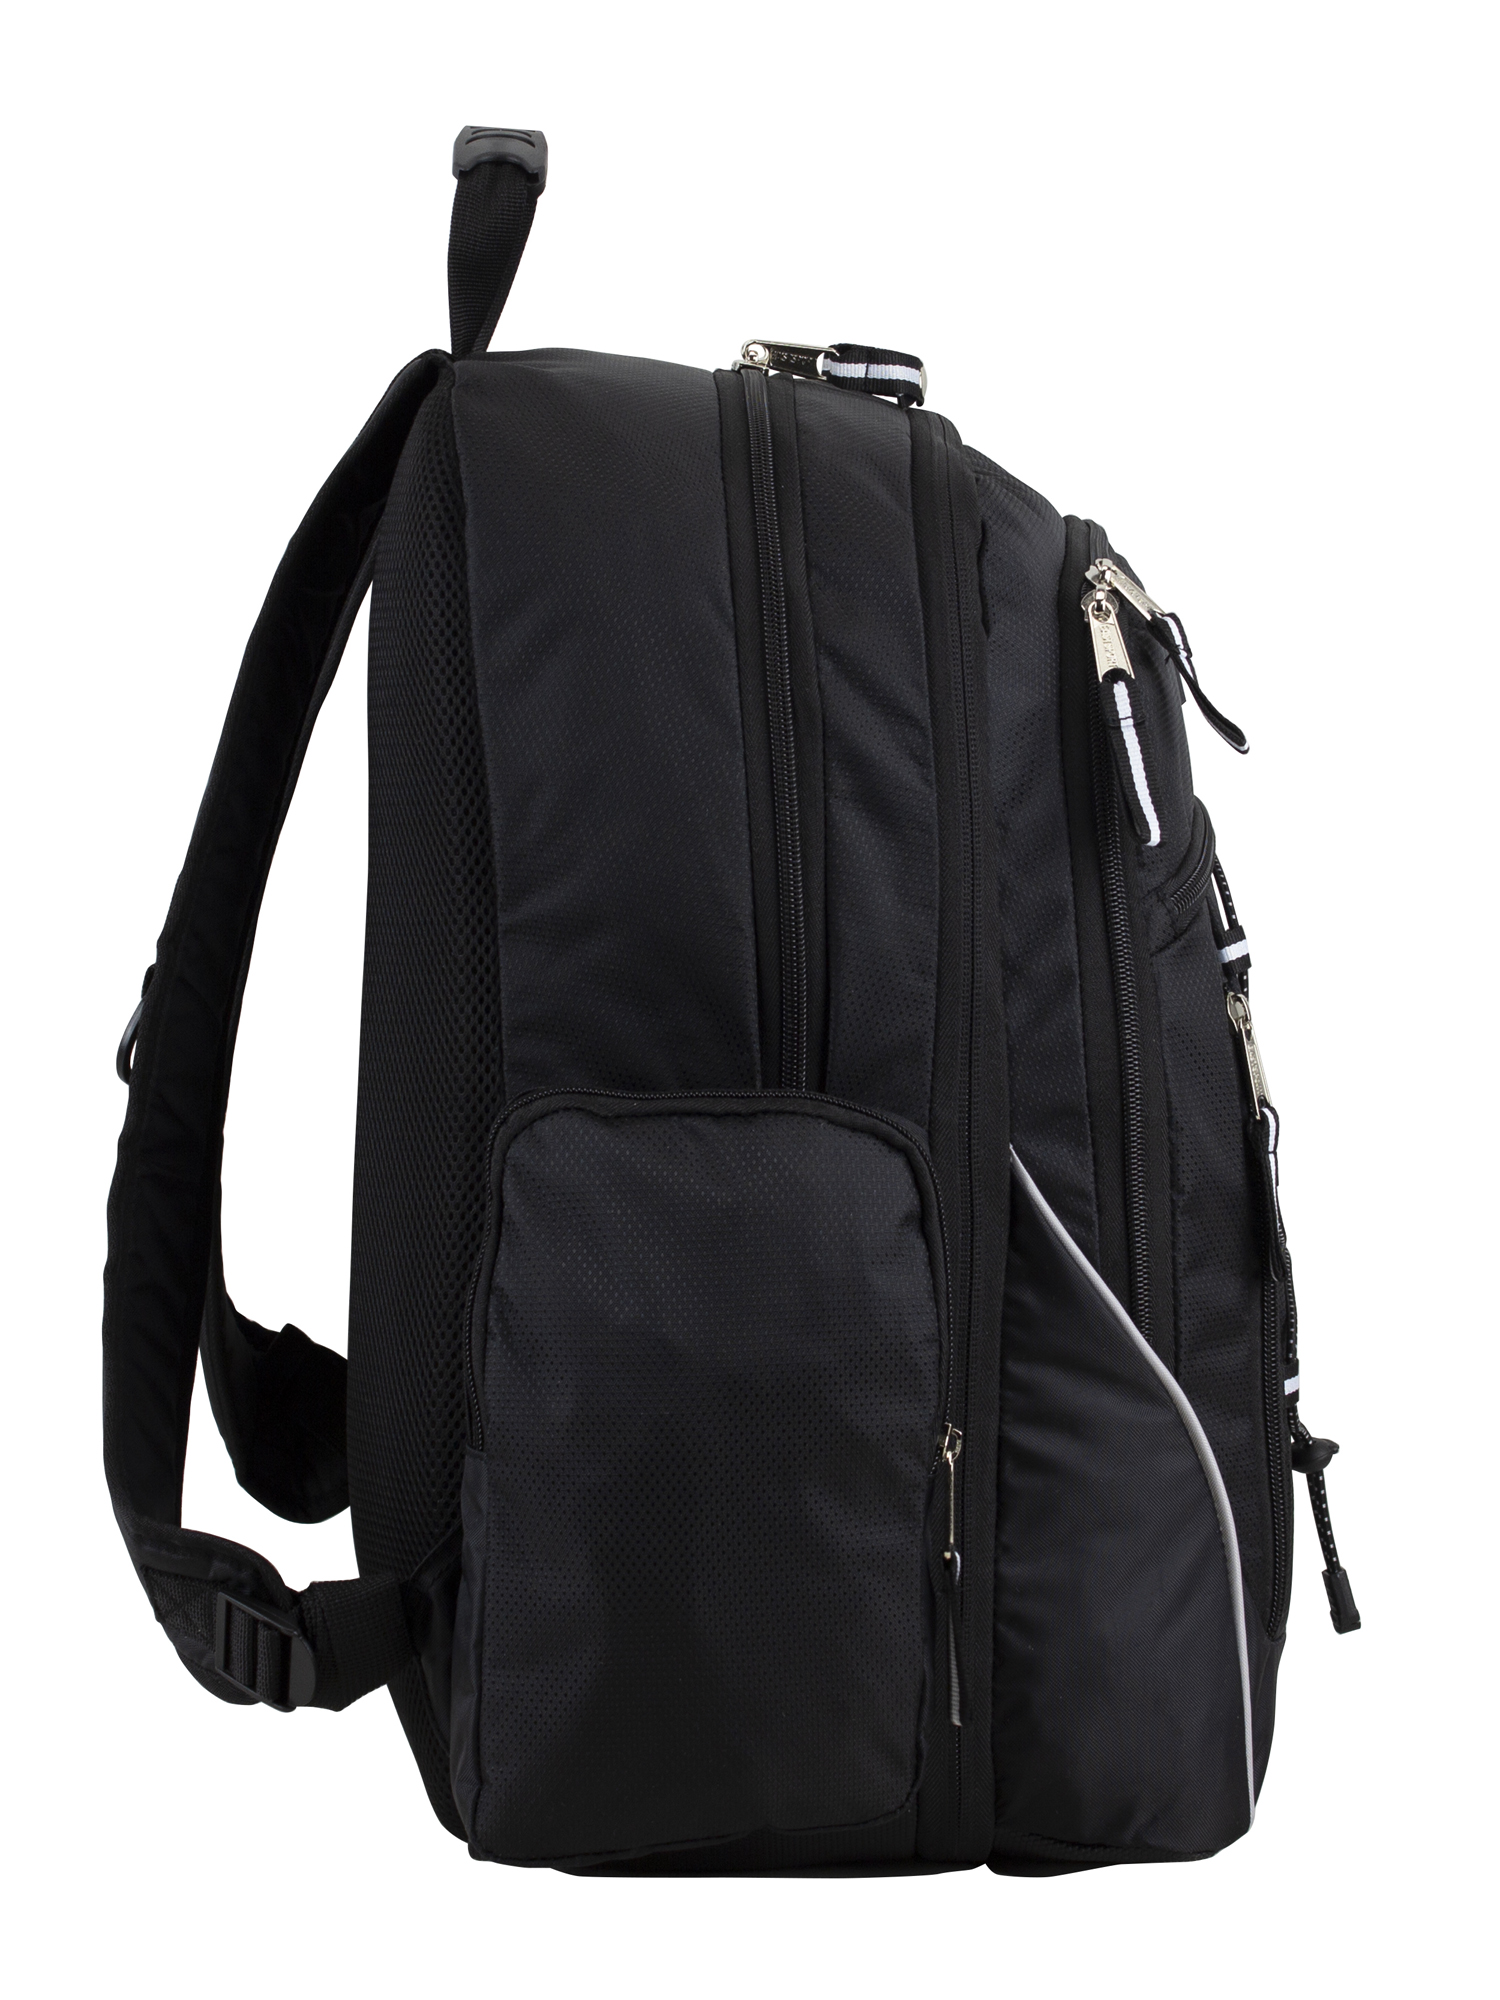 Eastsport Optimus Backpack, Black - image 3 of 7